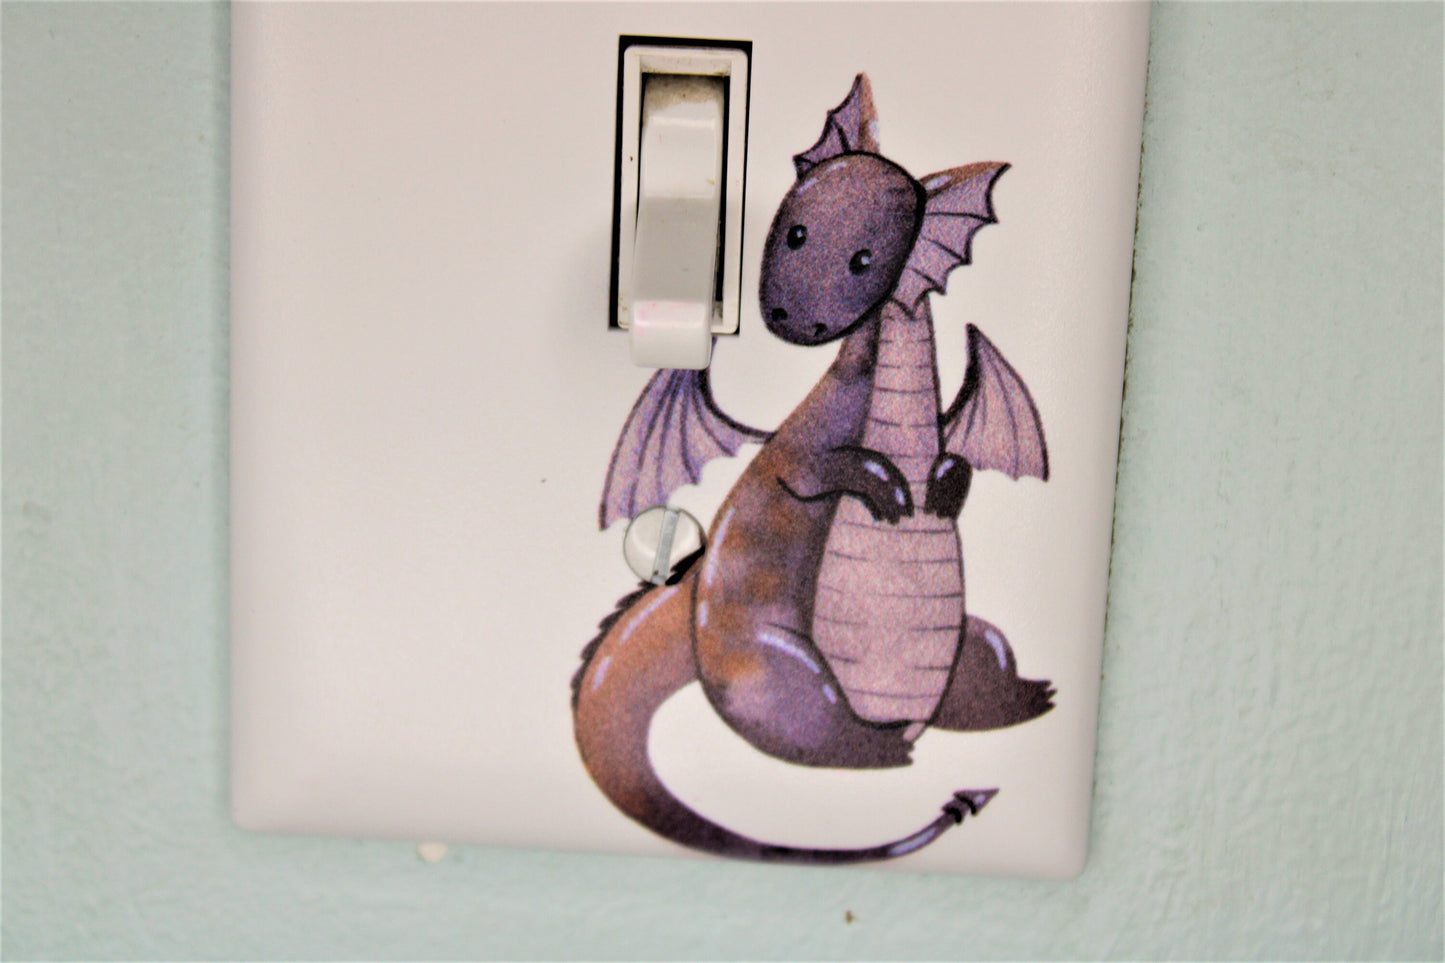 purple dragon cartoon prince princess room decor unique custom printed in color light switch plate cover durable fairy tale theme